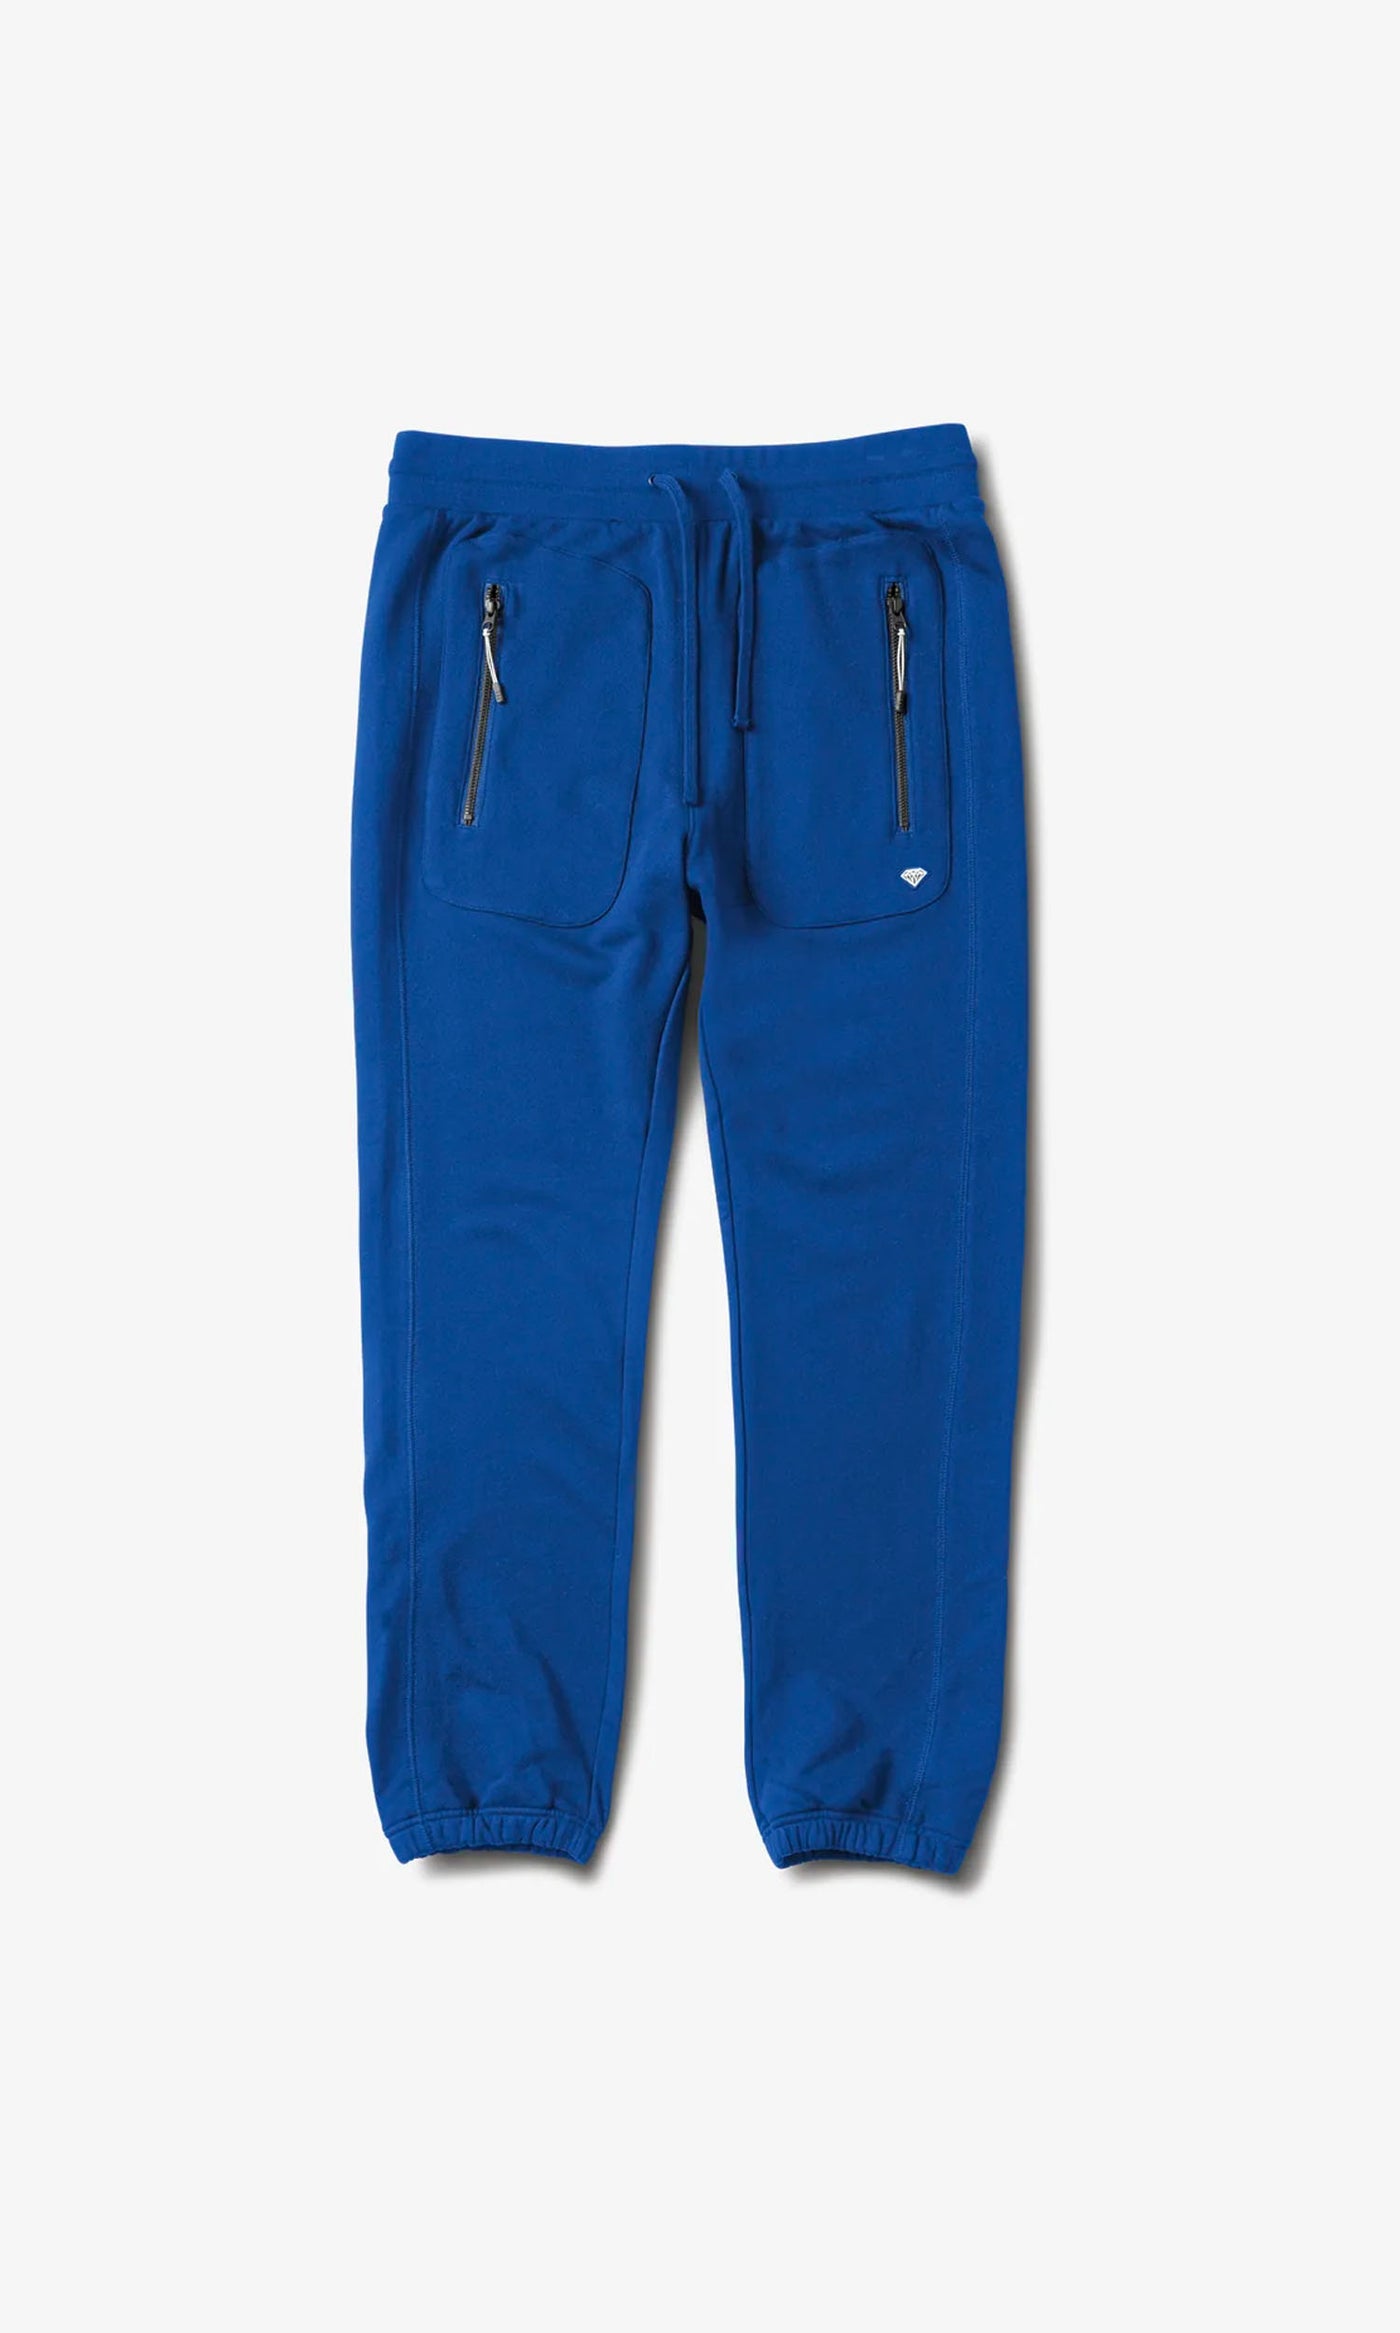 Leeway Sweatpants - Blue